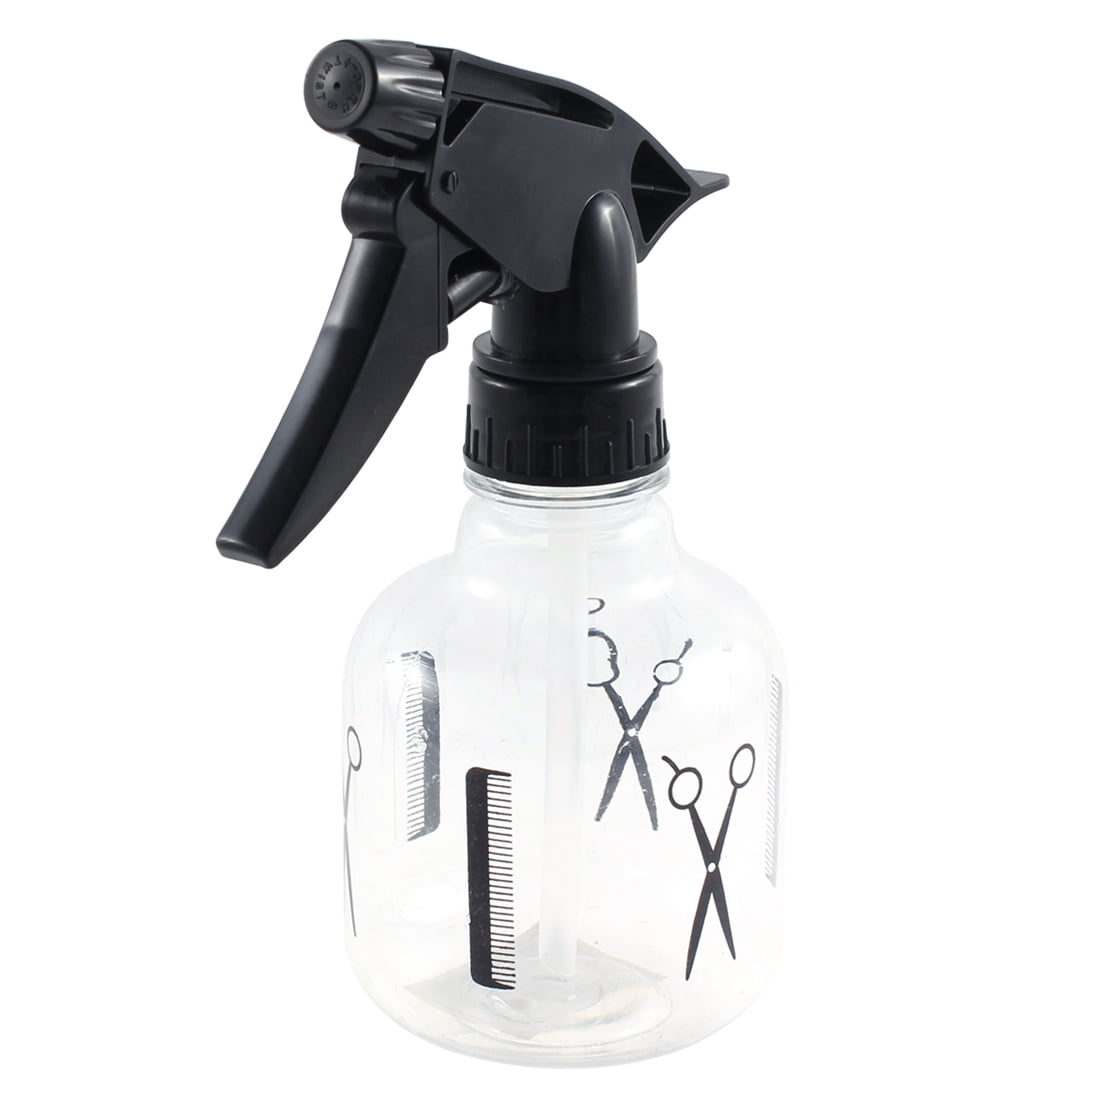 PET Plastic Hair Trigger Spray Bottle for Hair Cutting & Cleaning,Hair Spray